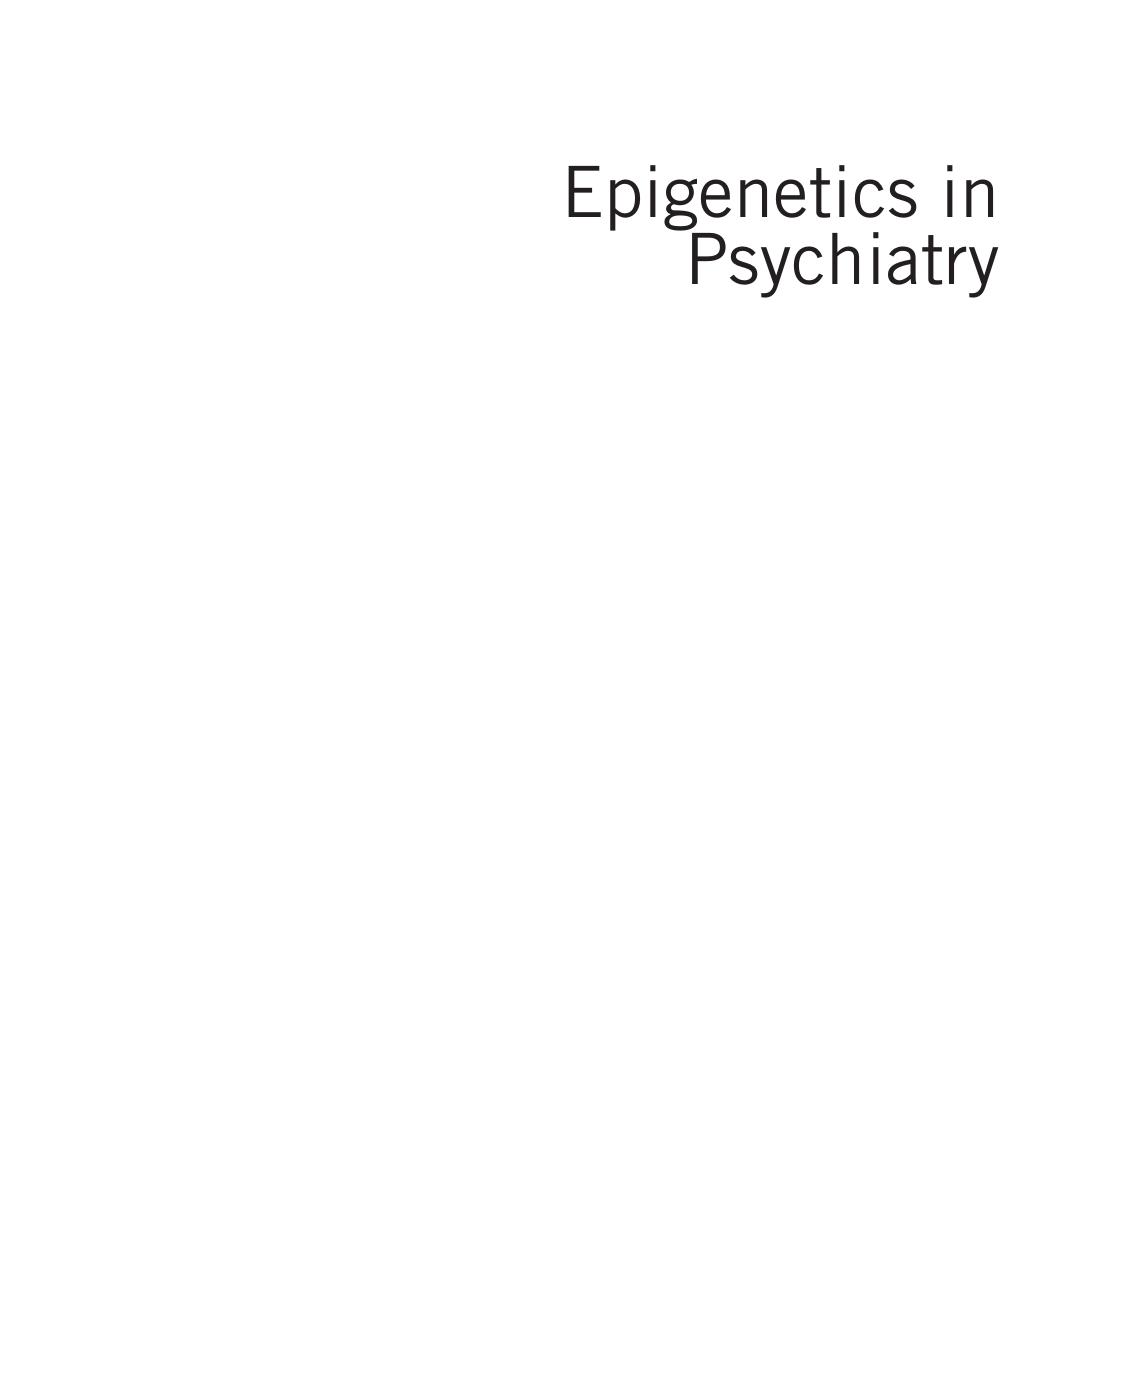 Epigenetics in Psychiatry 2014